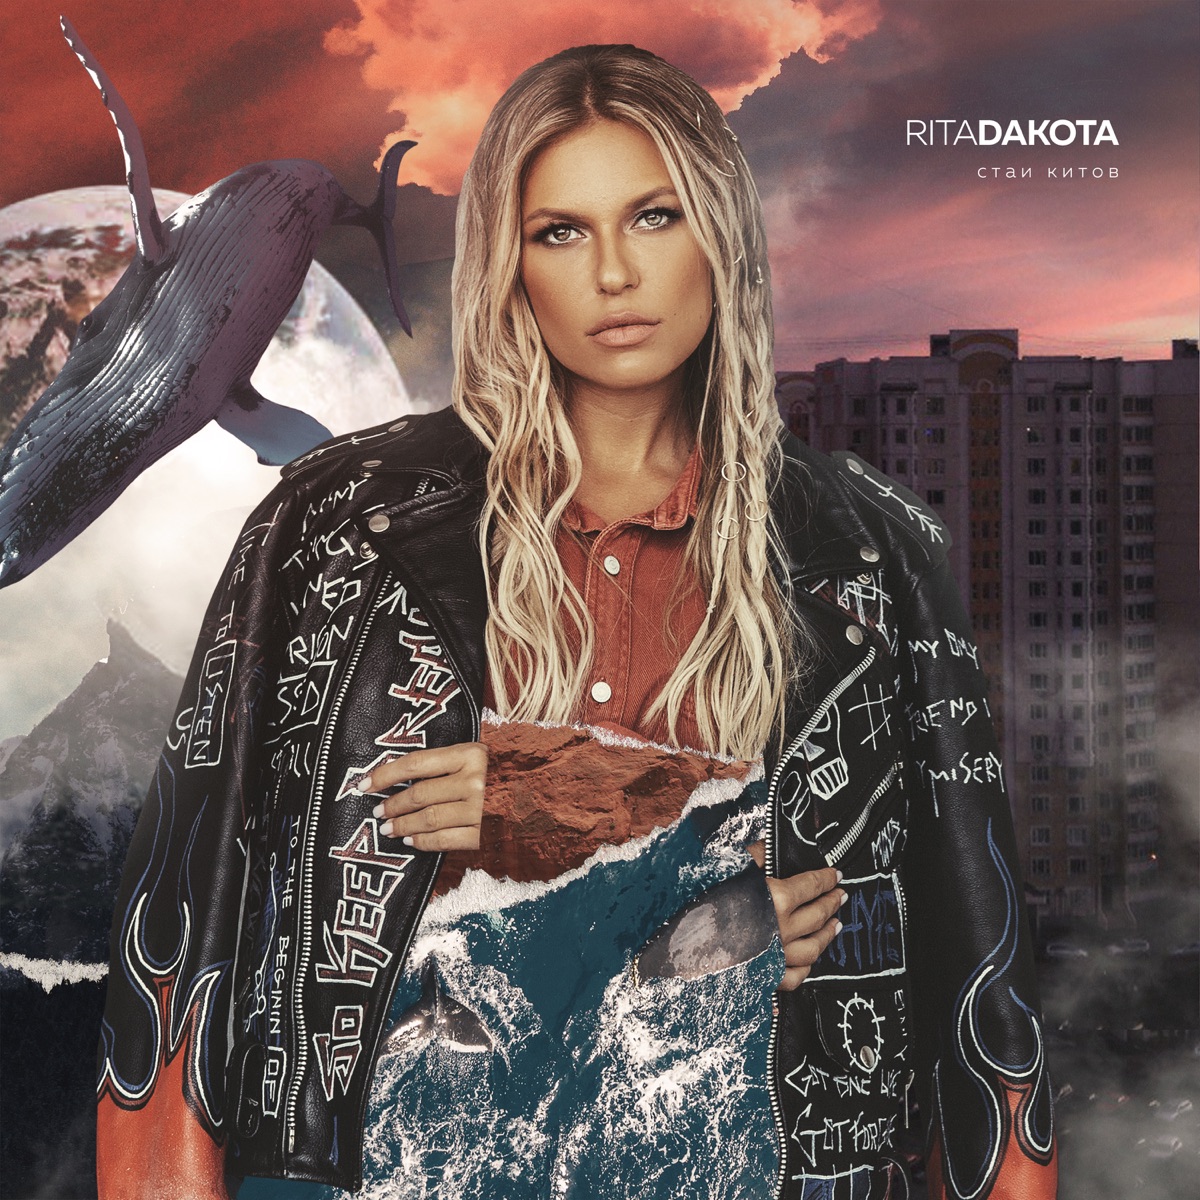 Rita Dakota Стаи китов cover artwork